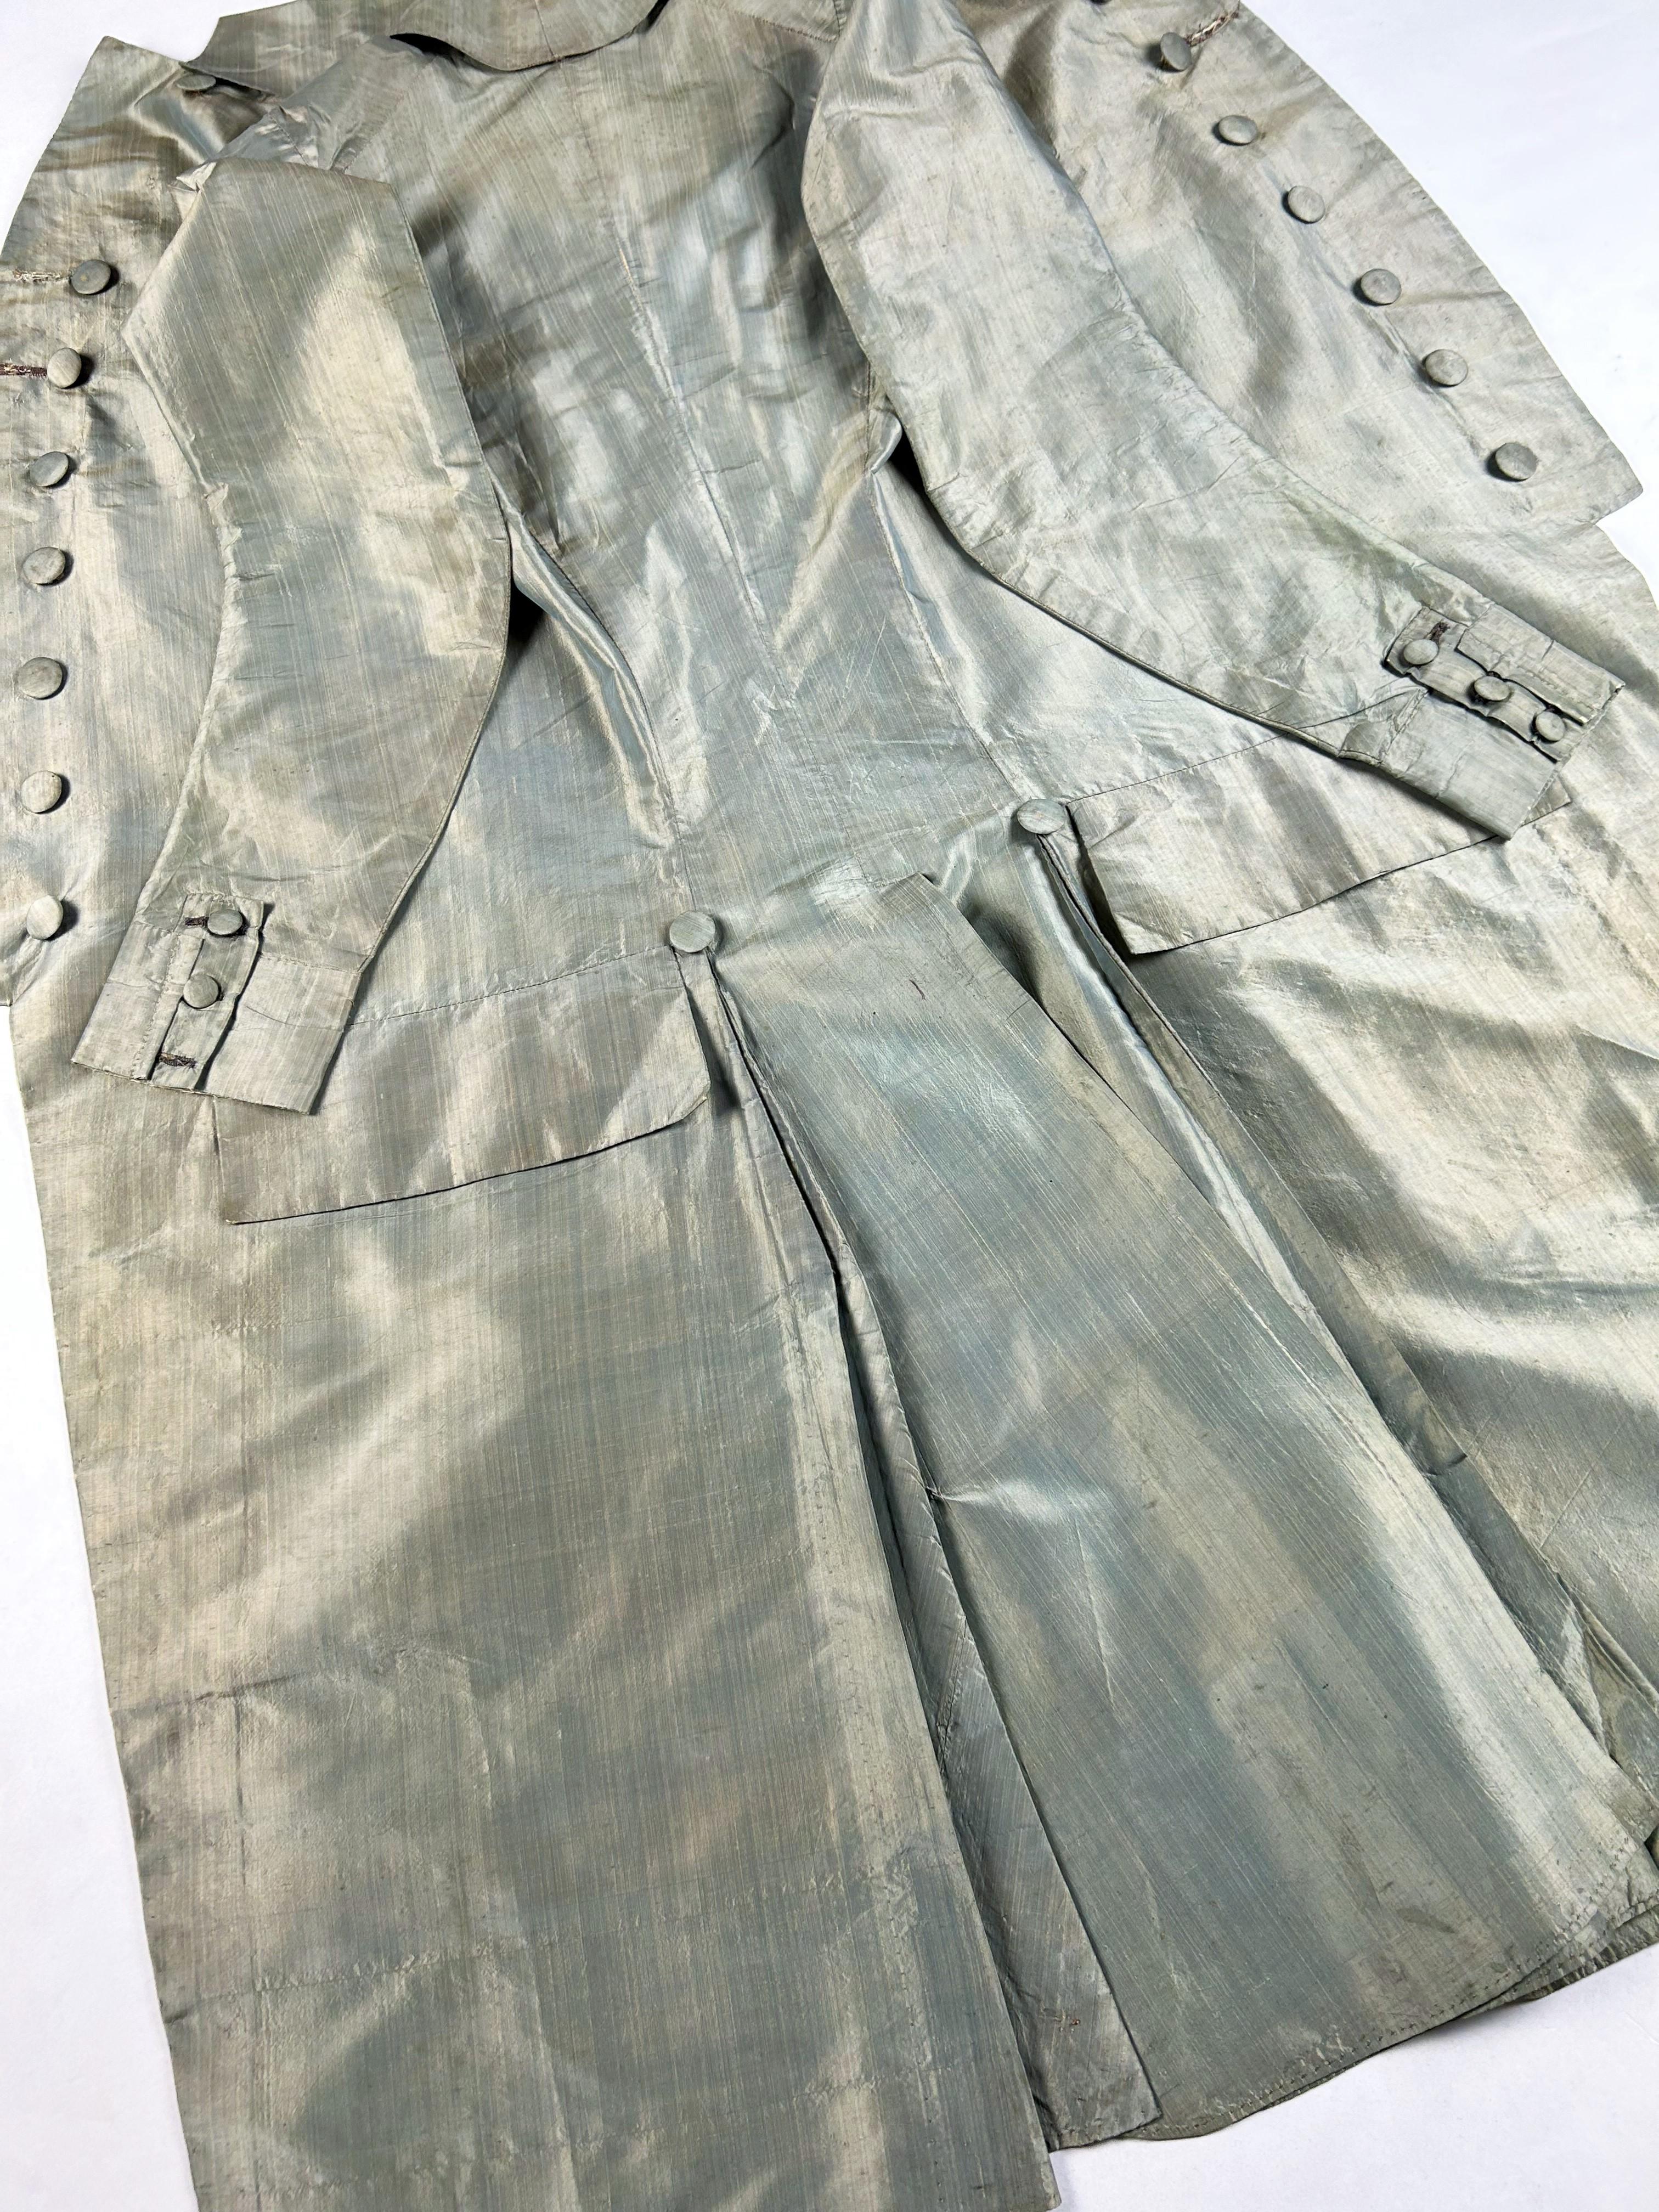 A changing taffeta summer habit and cotton waistcoat - England Circa 1785 9